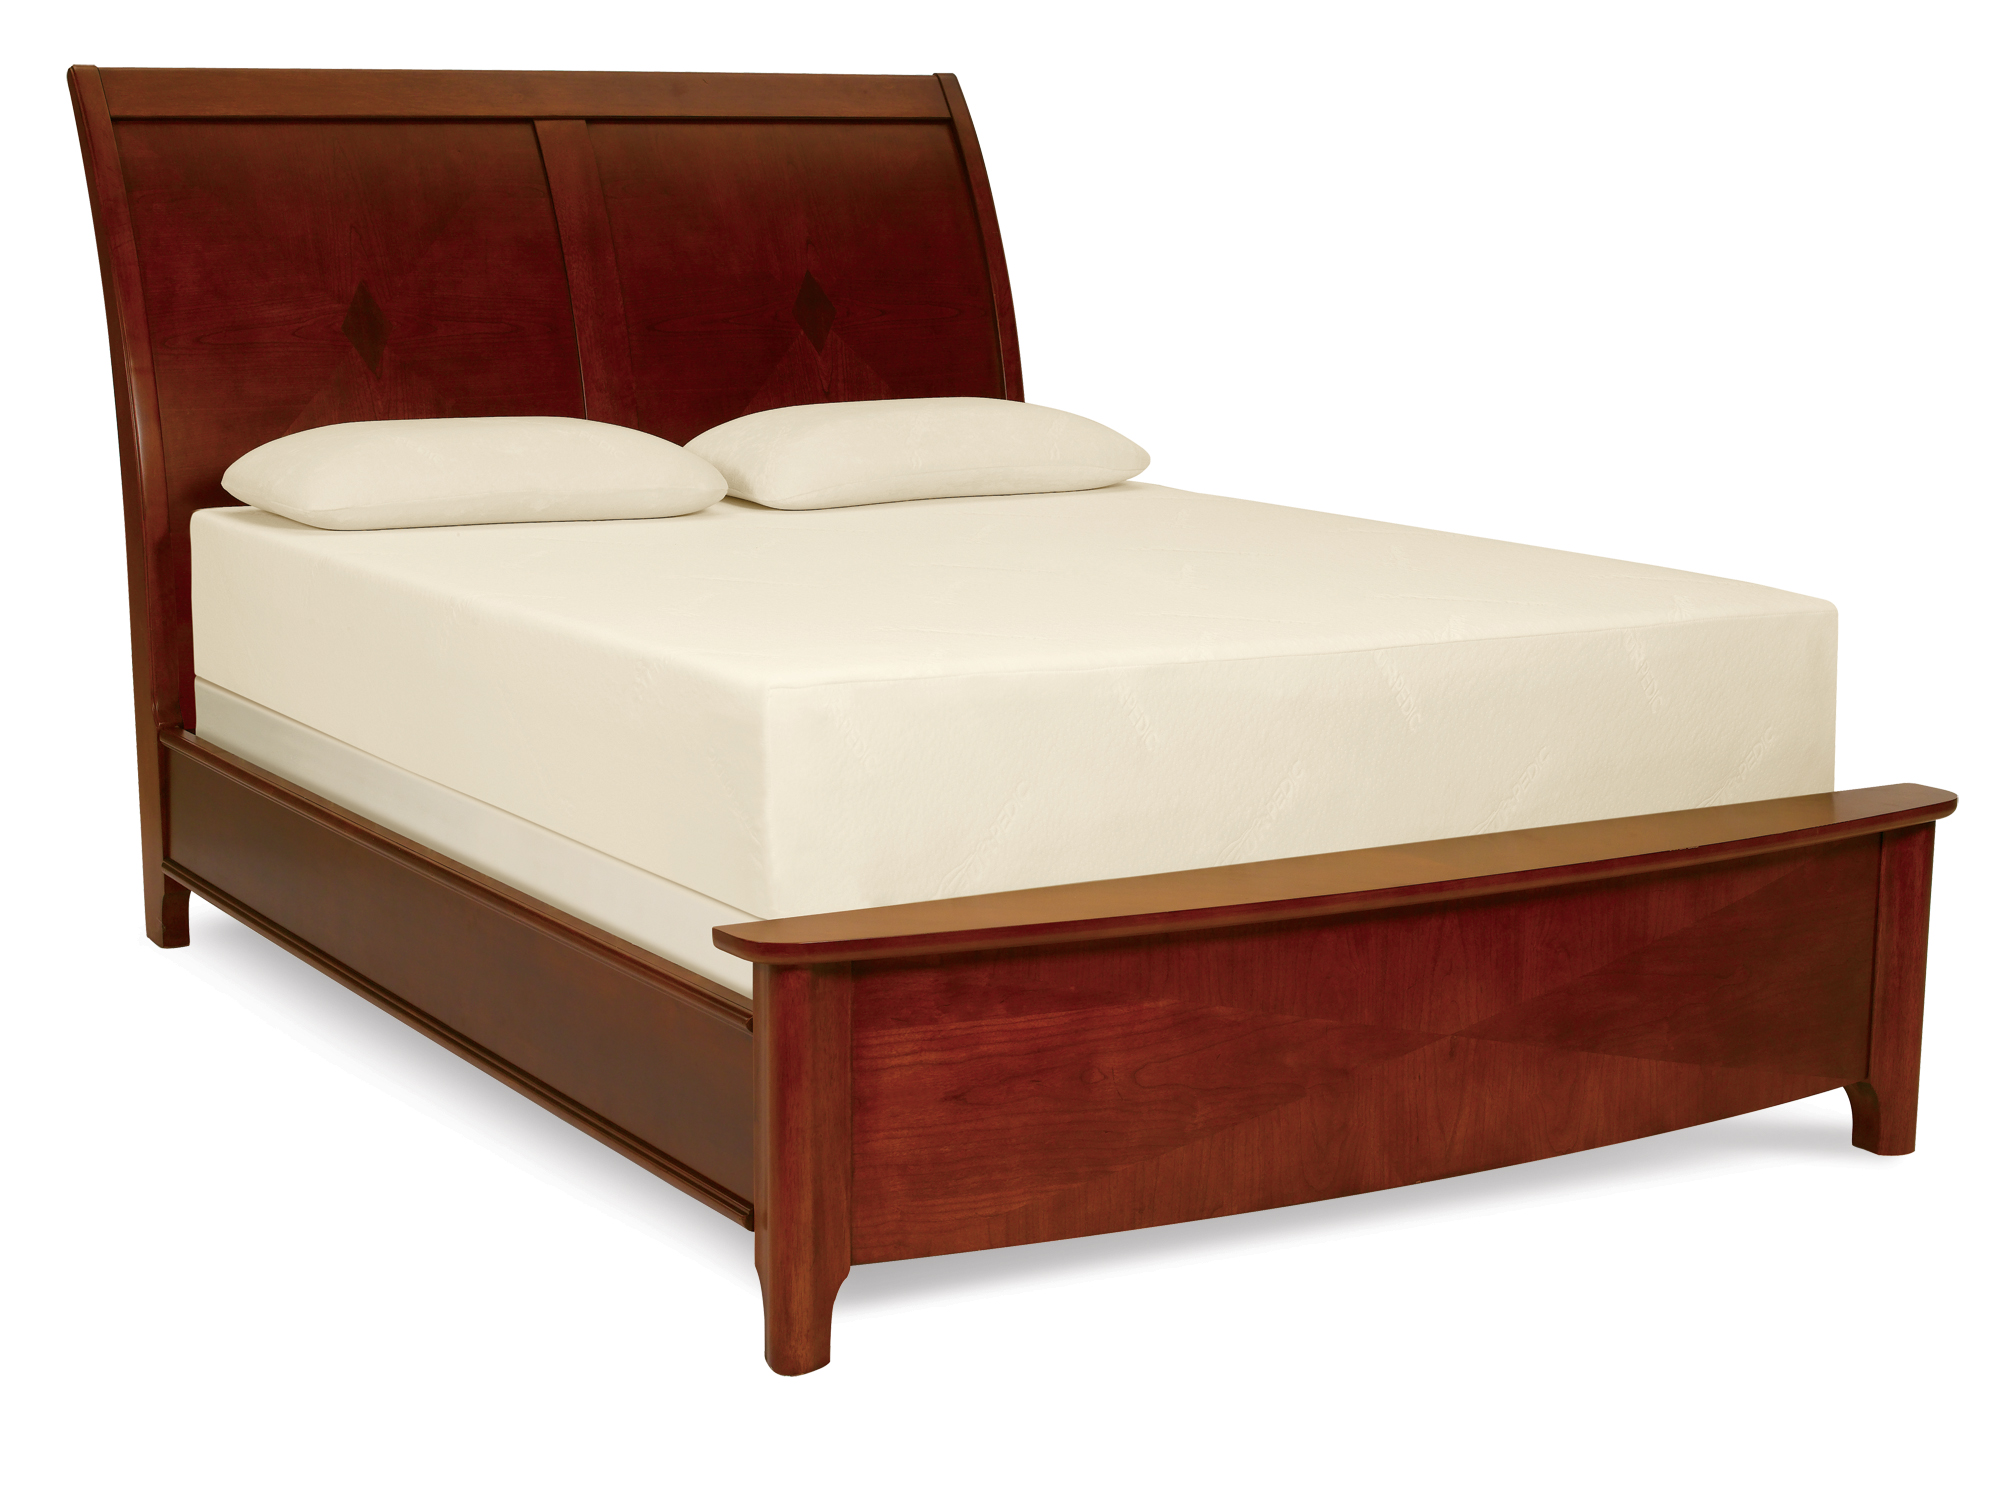 tempurpedic mattress canada cost